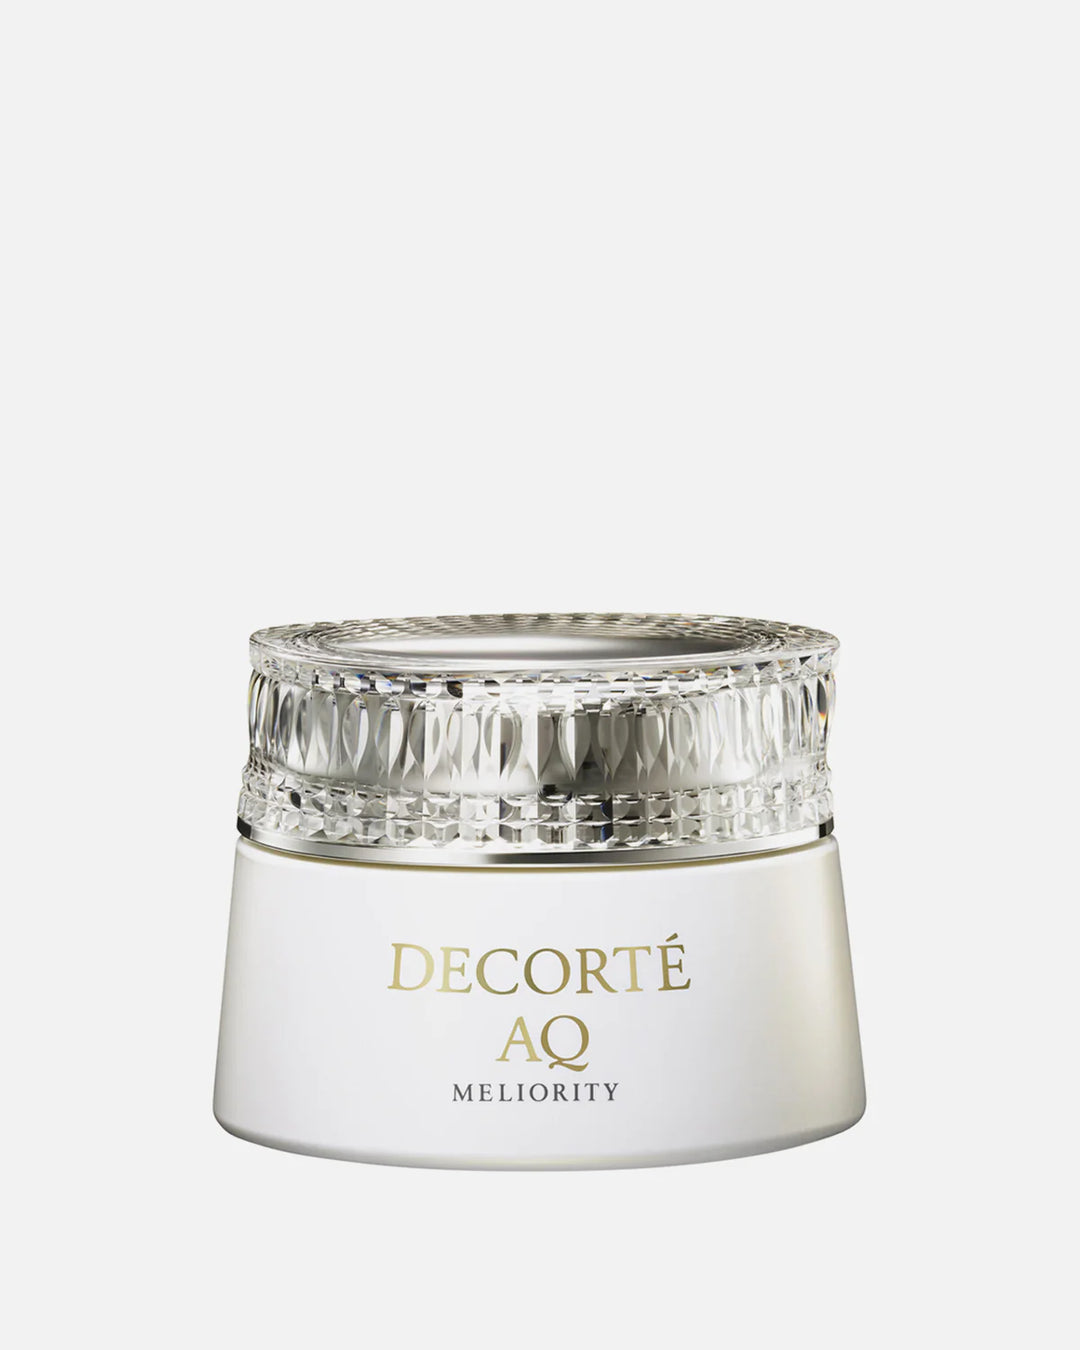 DECORTE AQ Meliority High Performance Renewal Cleansing Cream